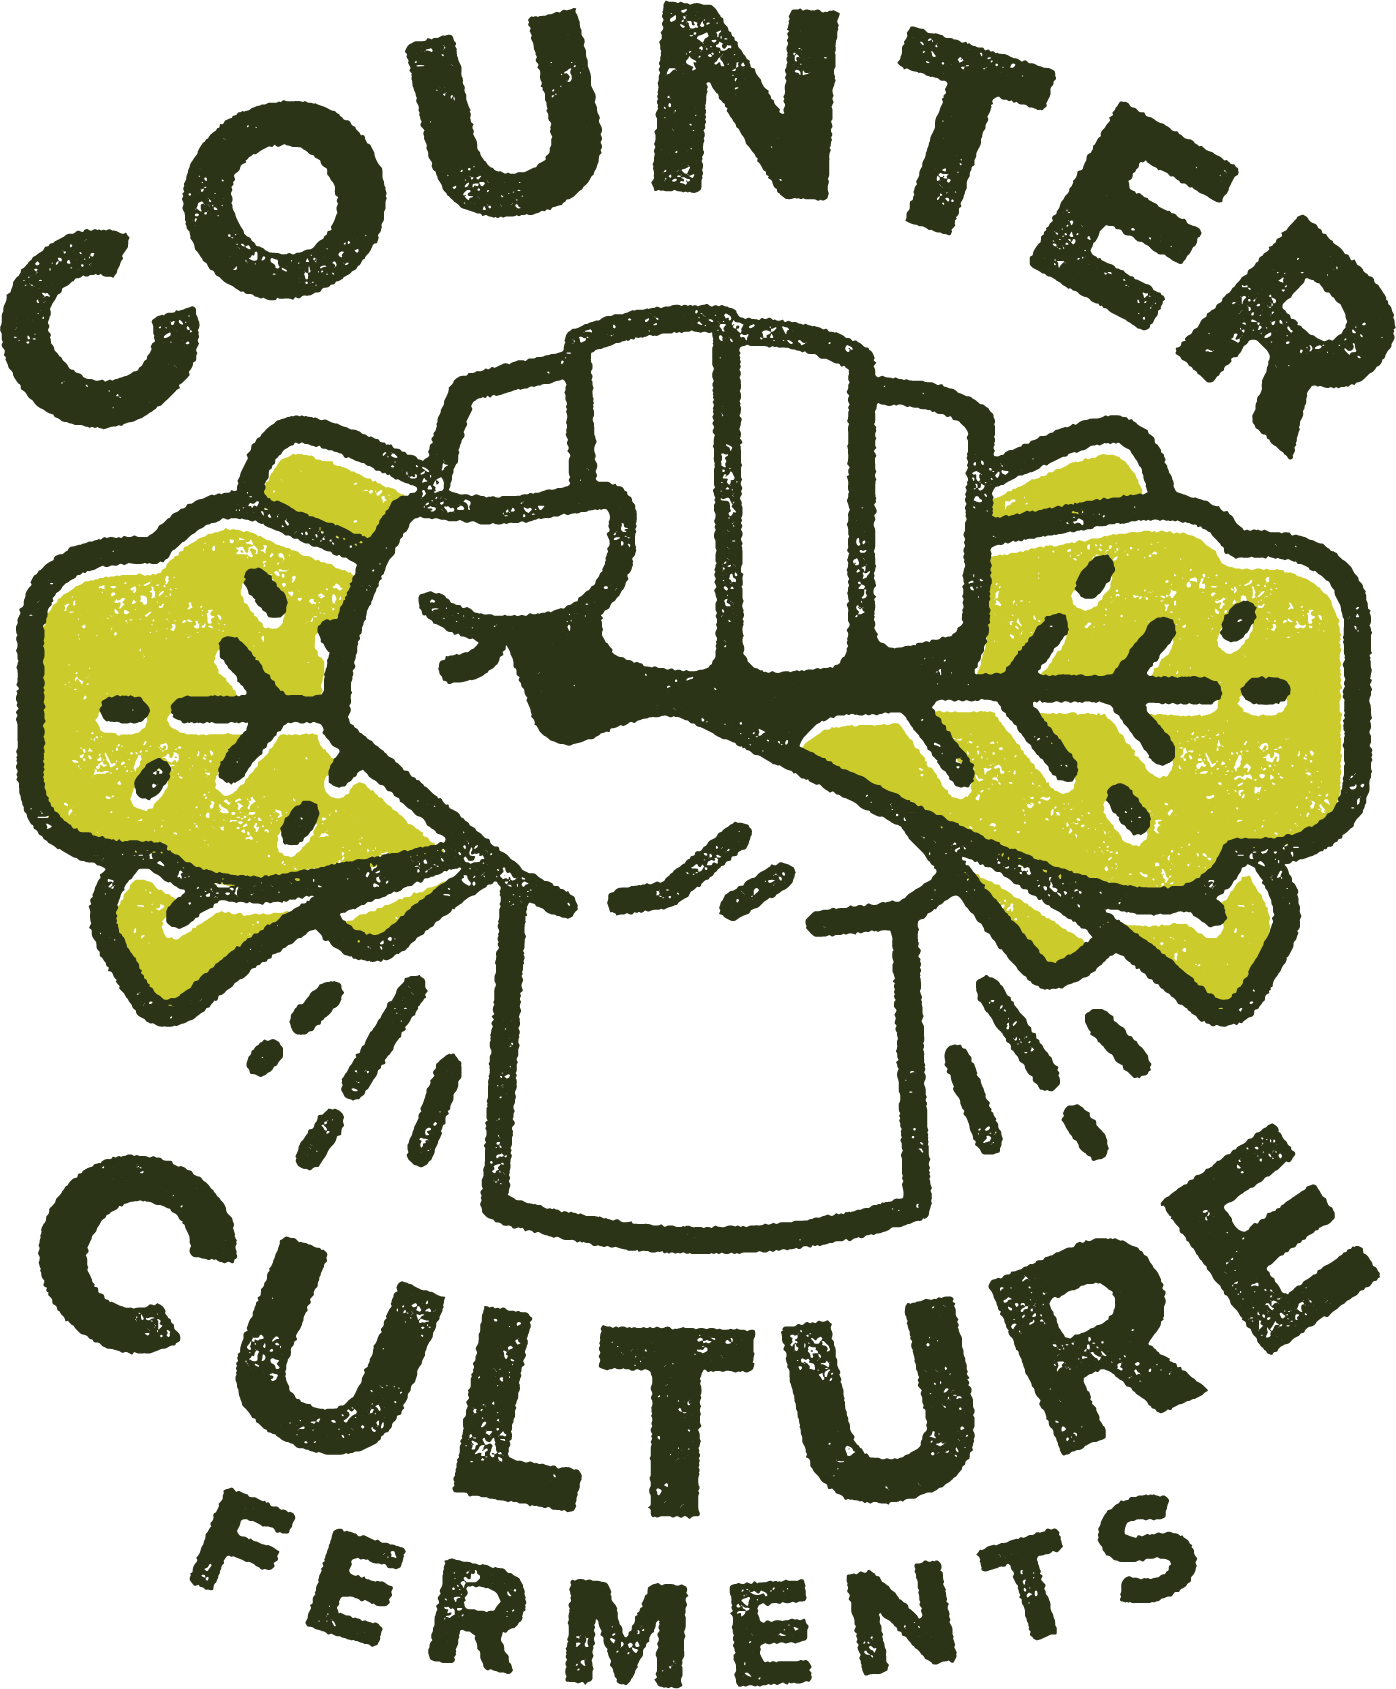 Counterculture